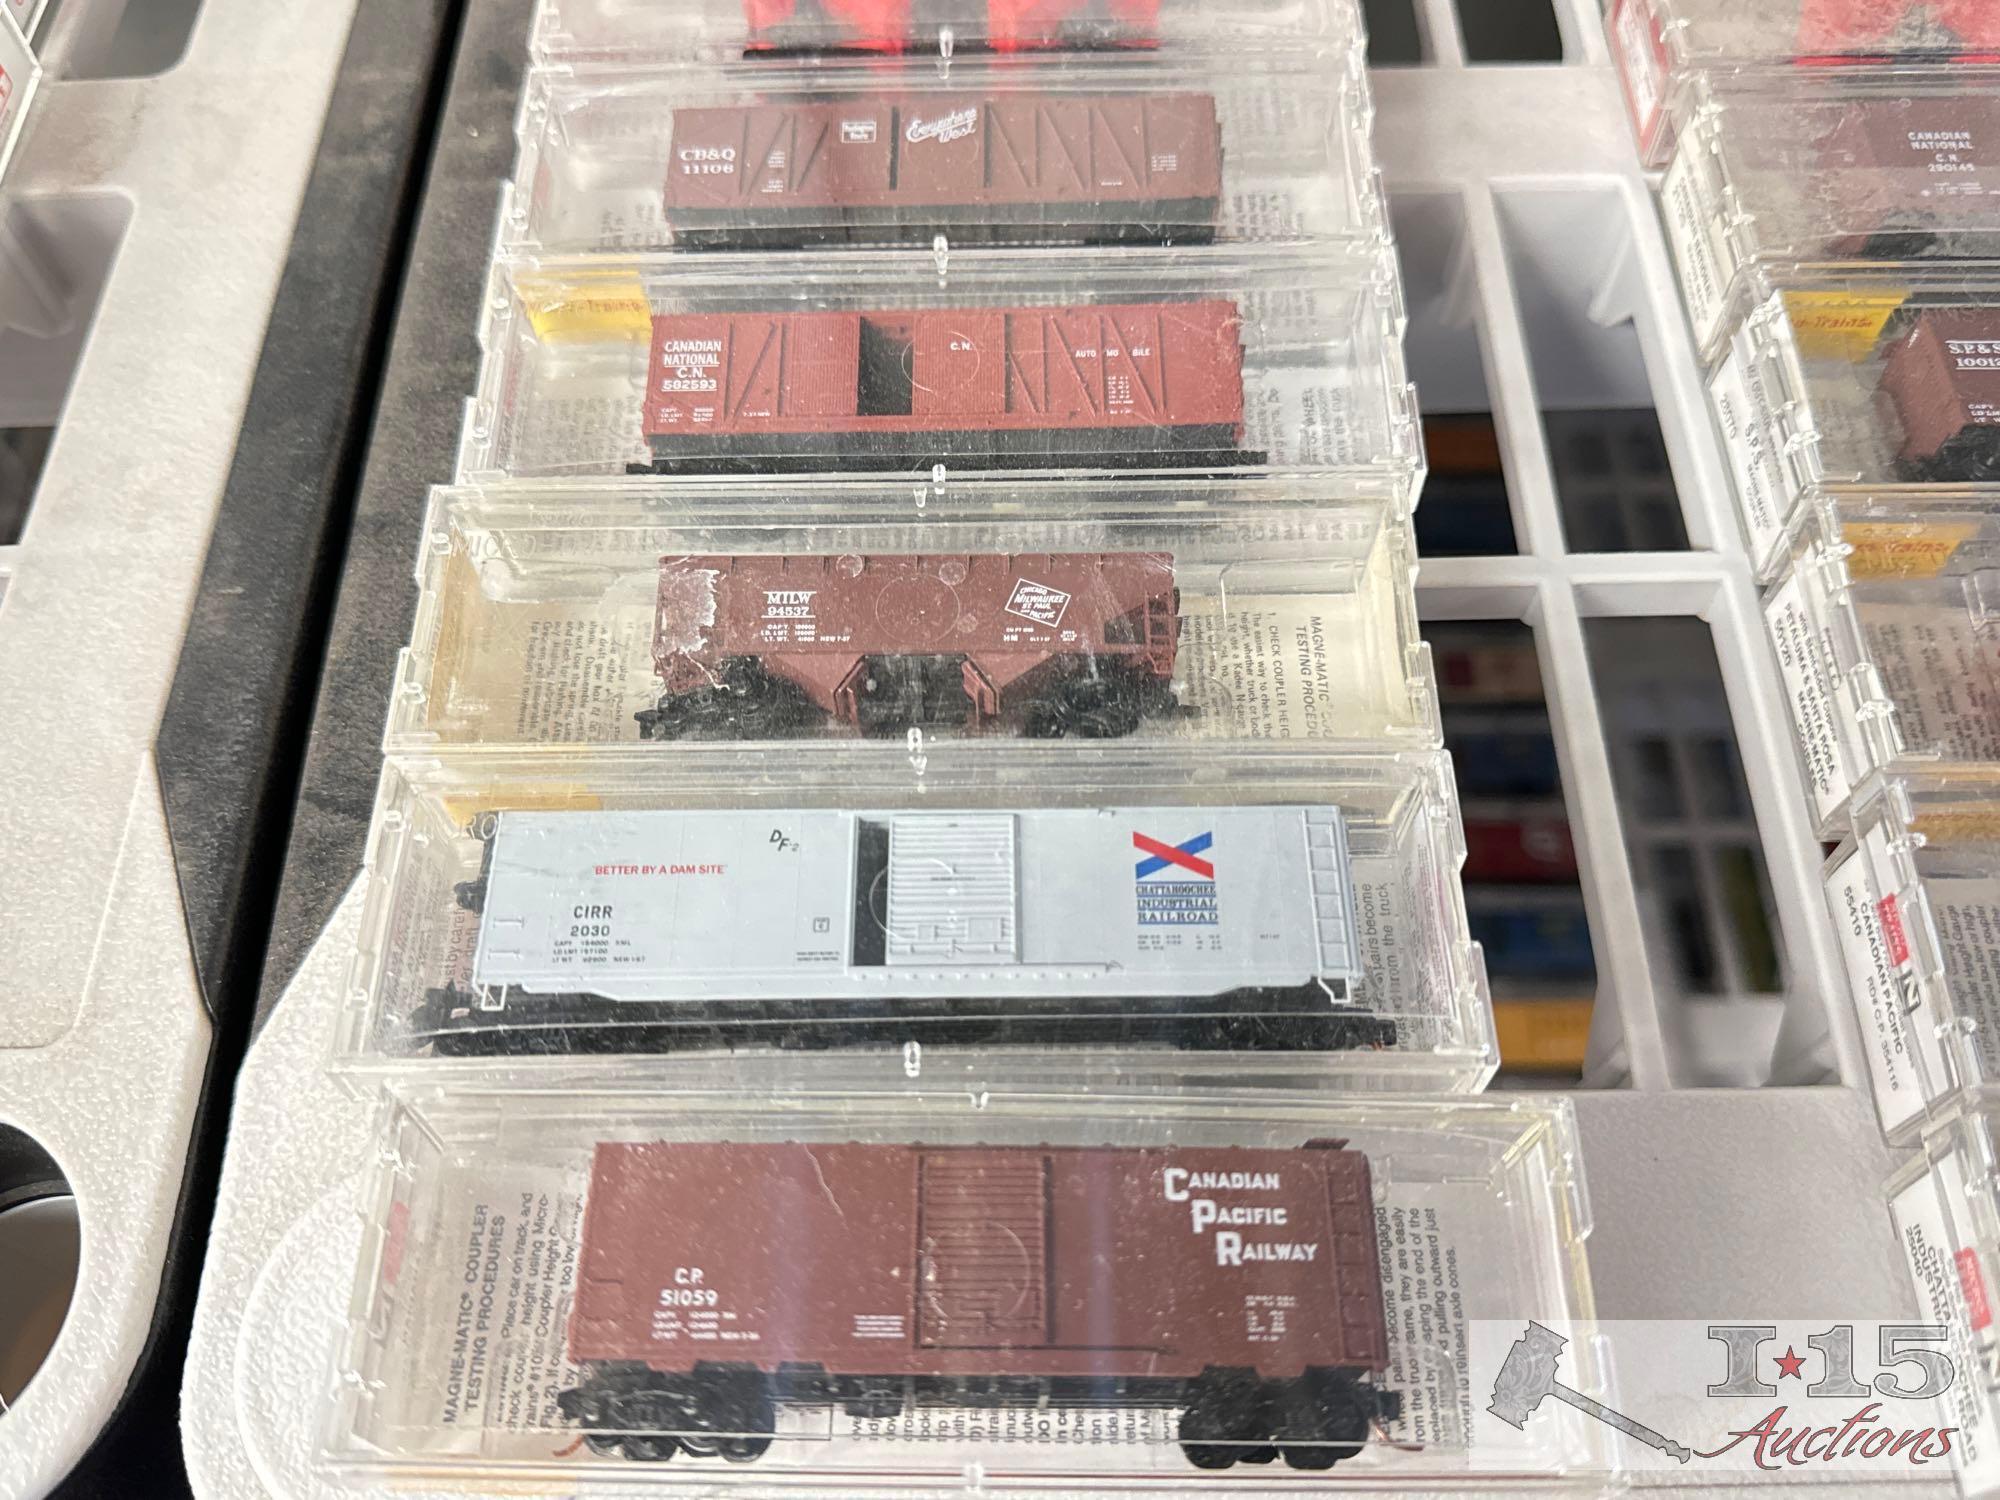 (80) Micro-Trains N-Scale Model Trains